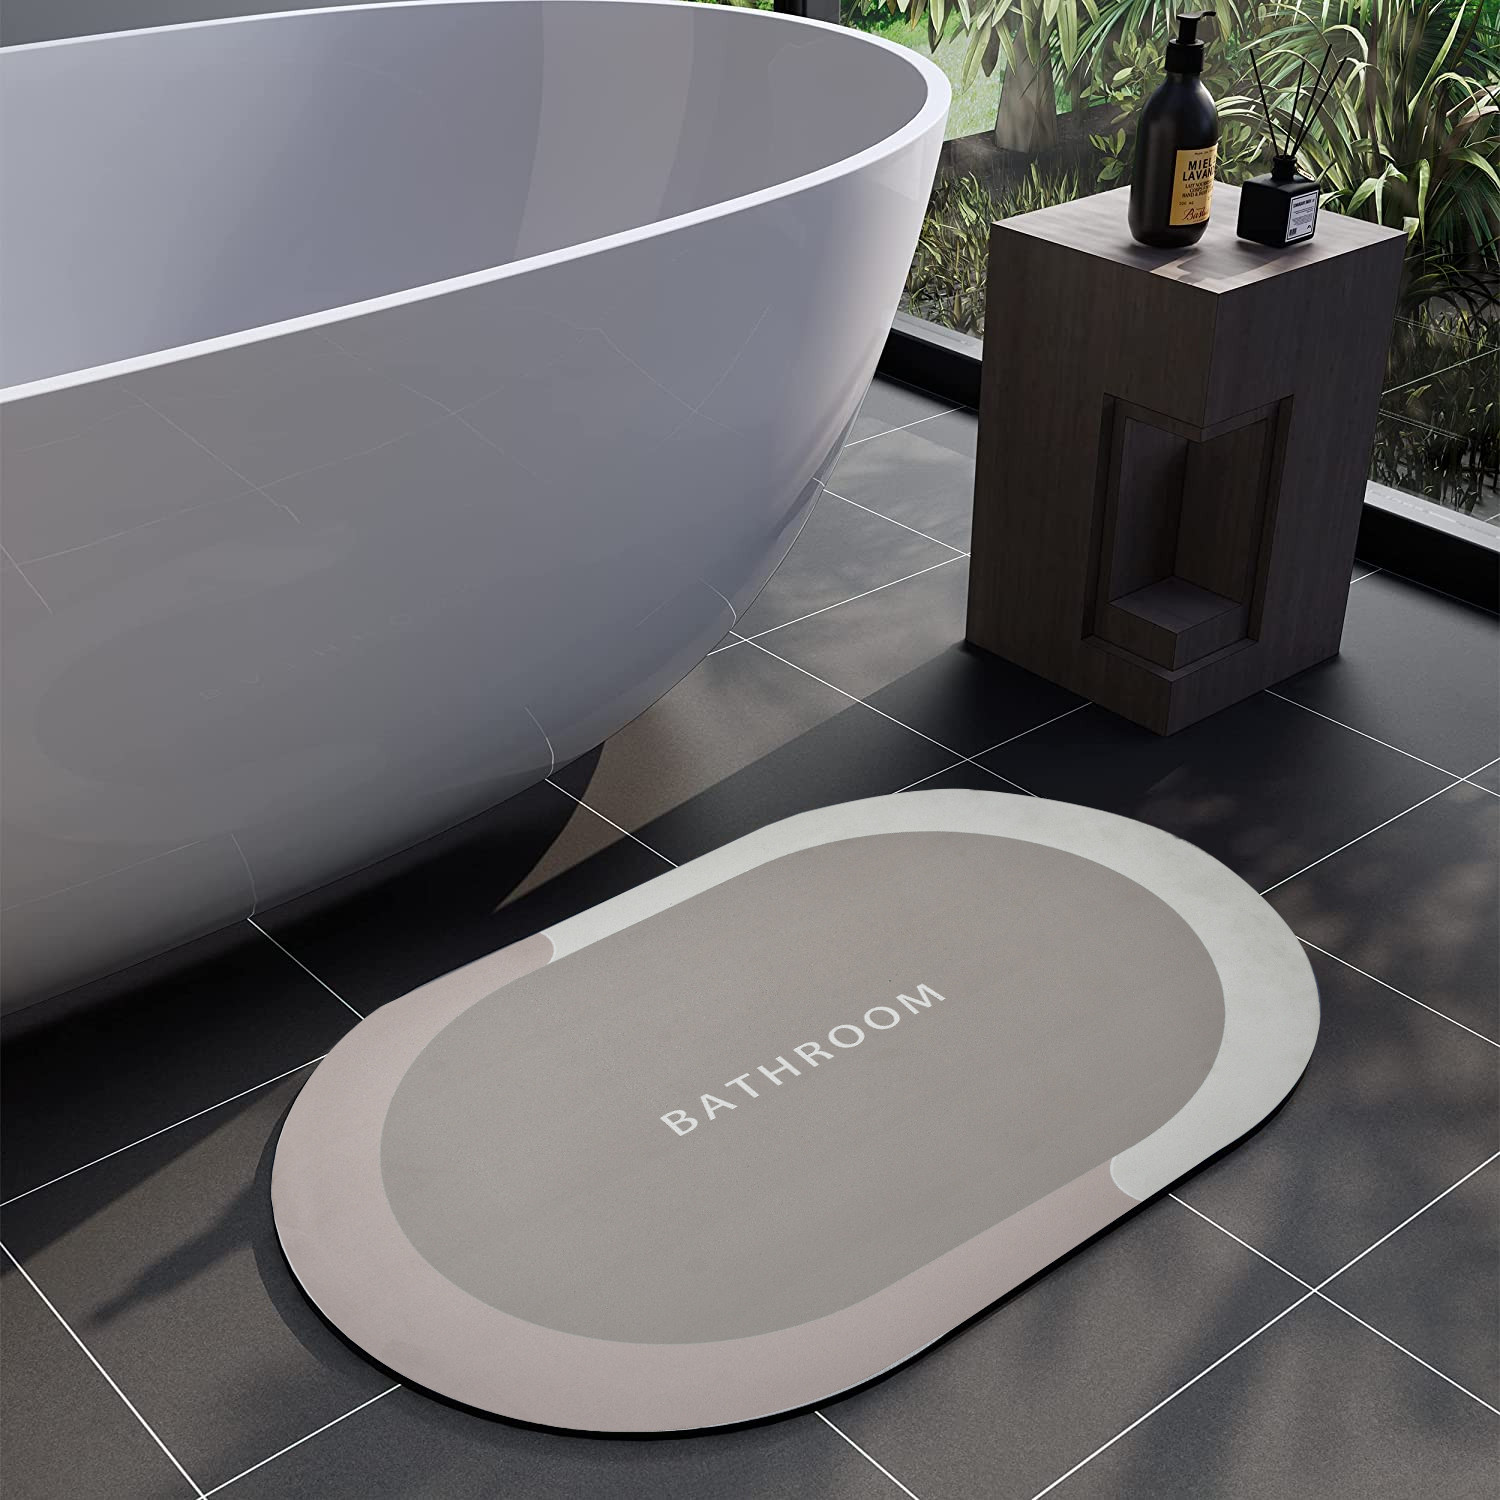 Kuber Industries Bathroom mat|Bathroom mat Super Absorbent Floor mat|Anti-skid Bathroom mat|Memory Foam Bathroom Rug Mat|Pack of 2 (Beige & Brown)